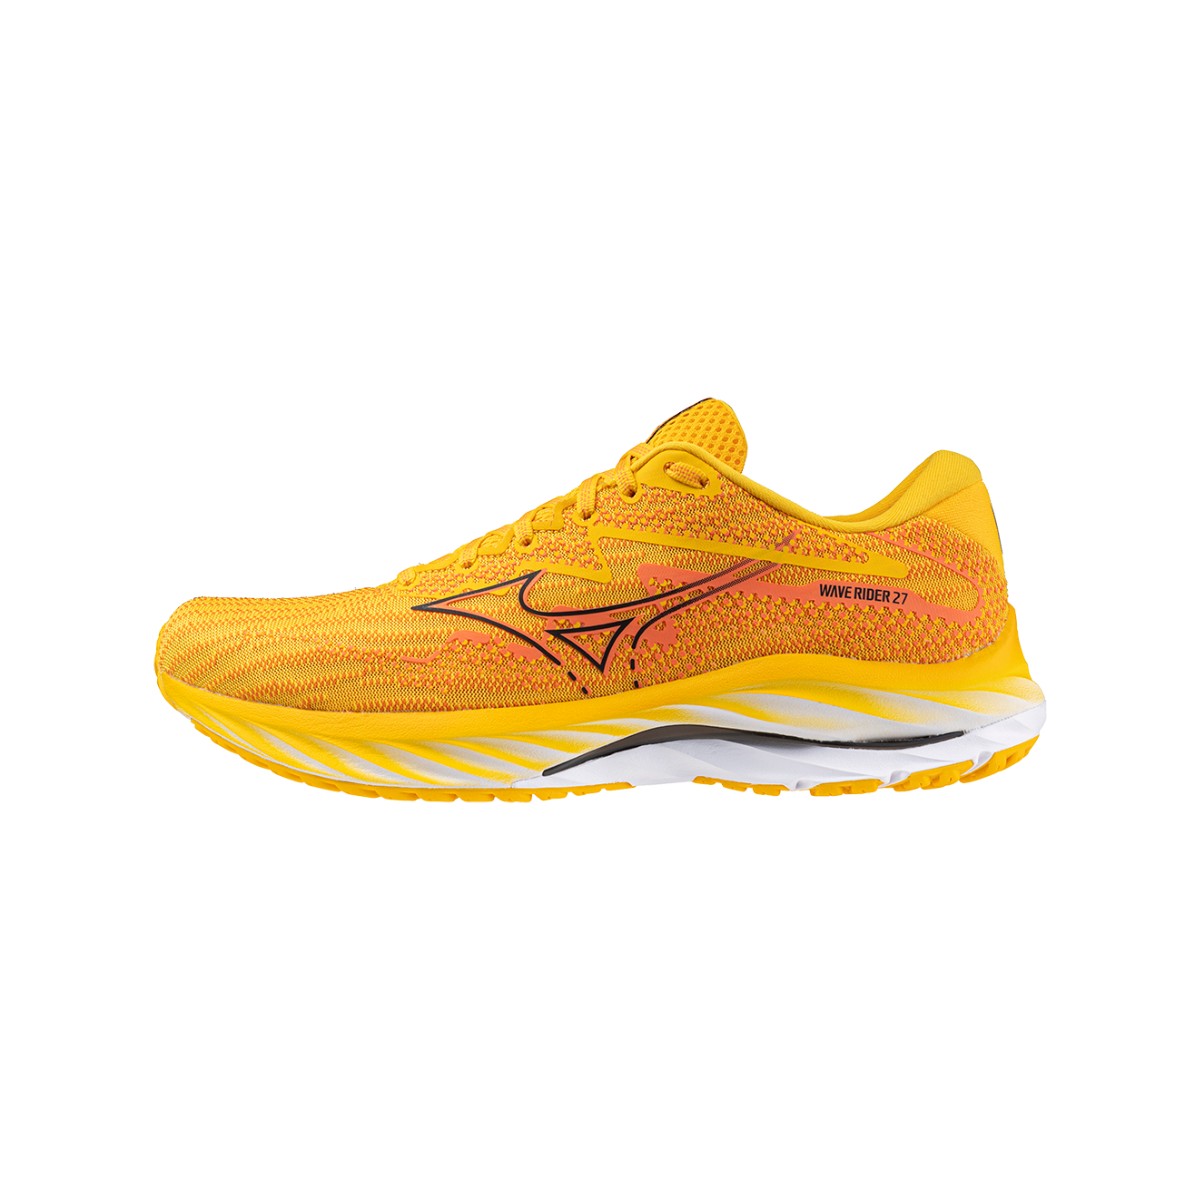 02 - zapatillas de running Mizuno mujer asfalto talla 44 amarillas